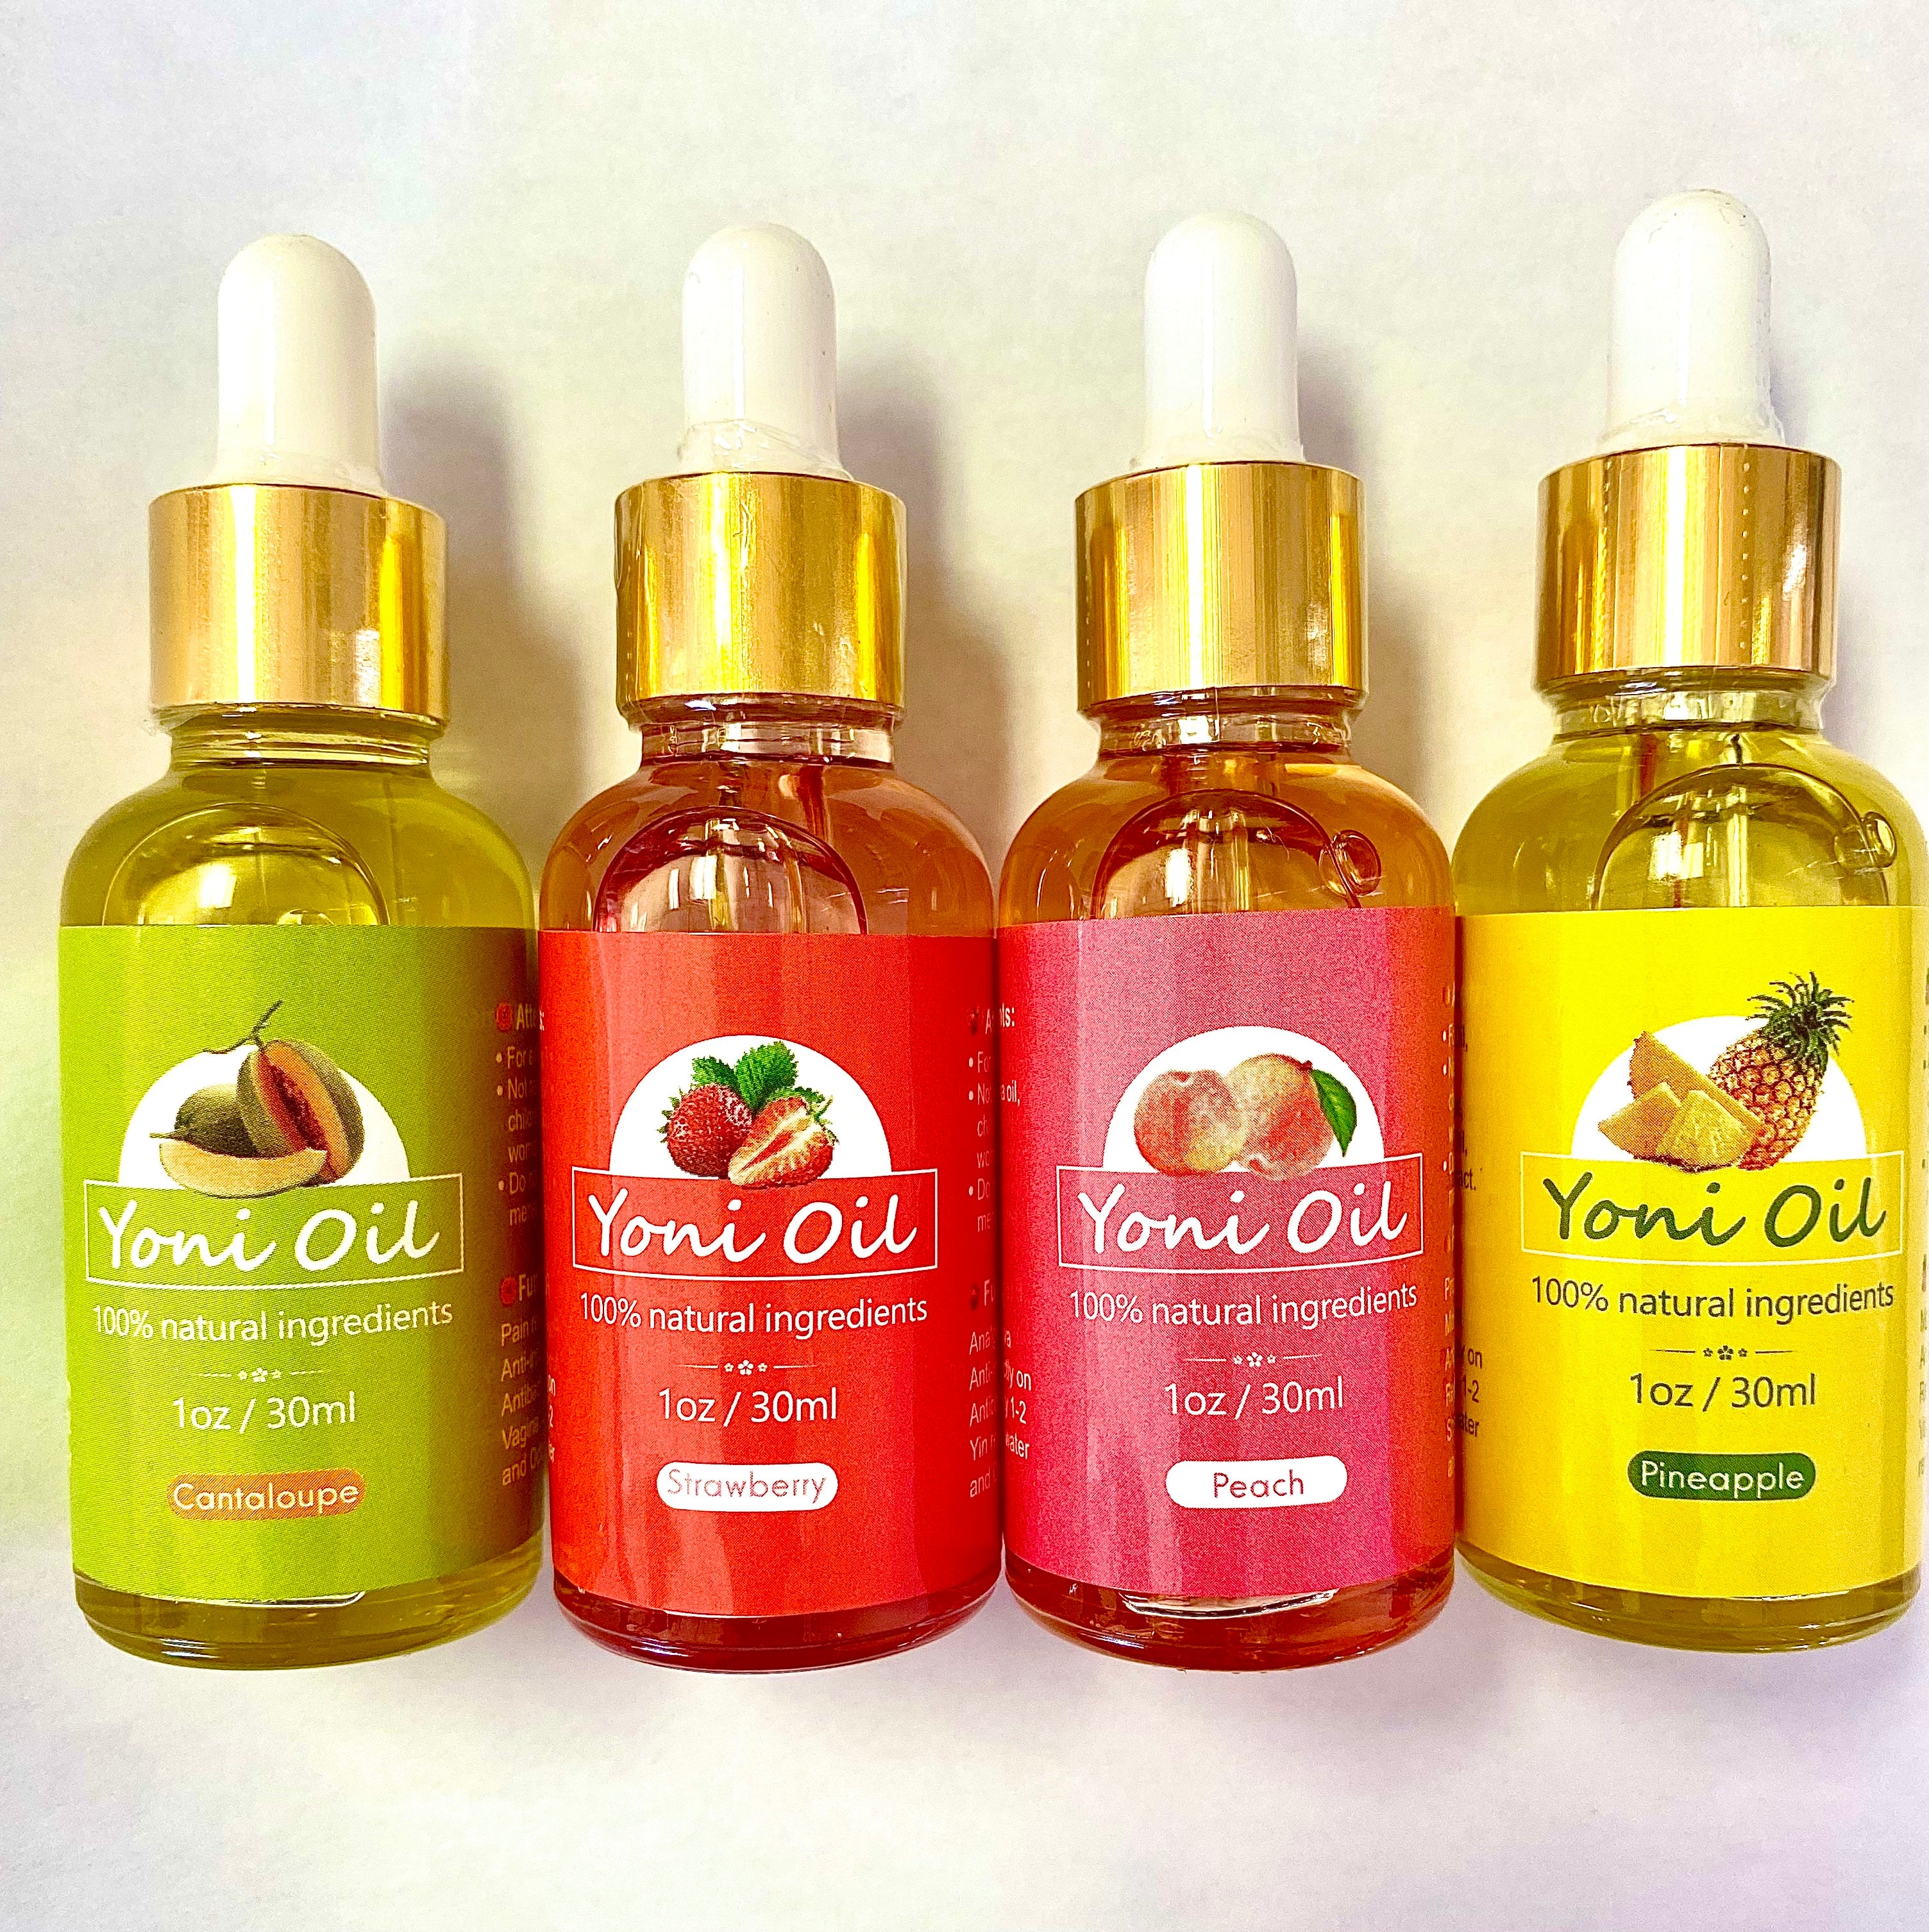 yoni oil recipe for tightening